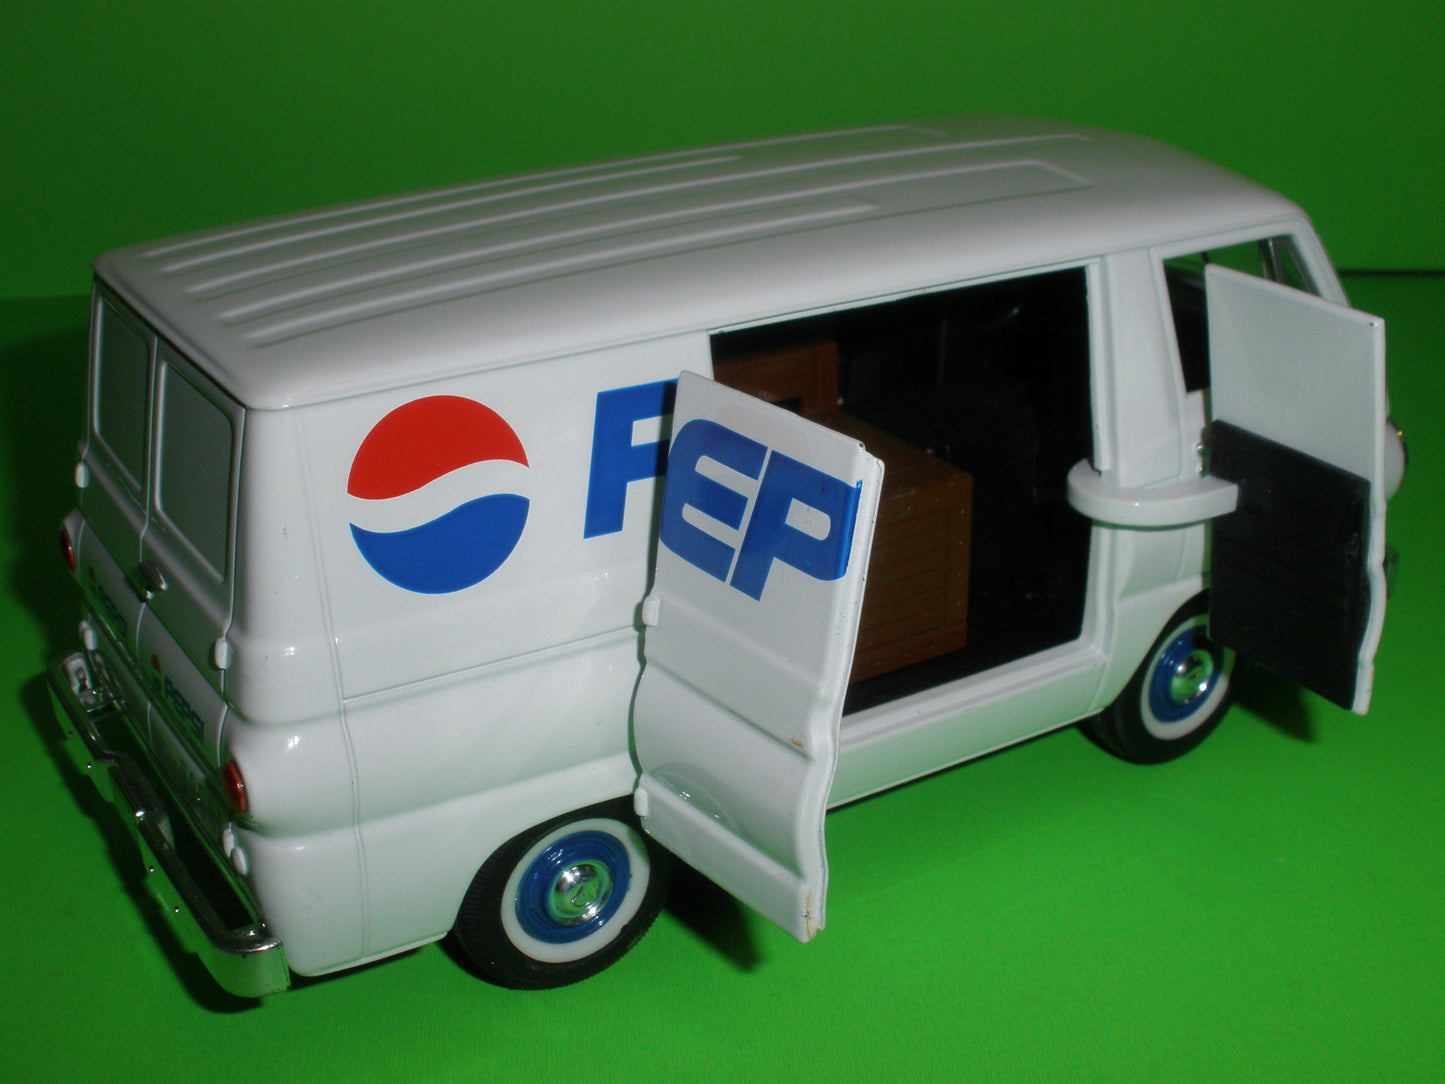 Pepsi Cola 1964 Dodge A100 Panel Van